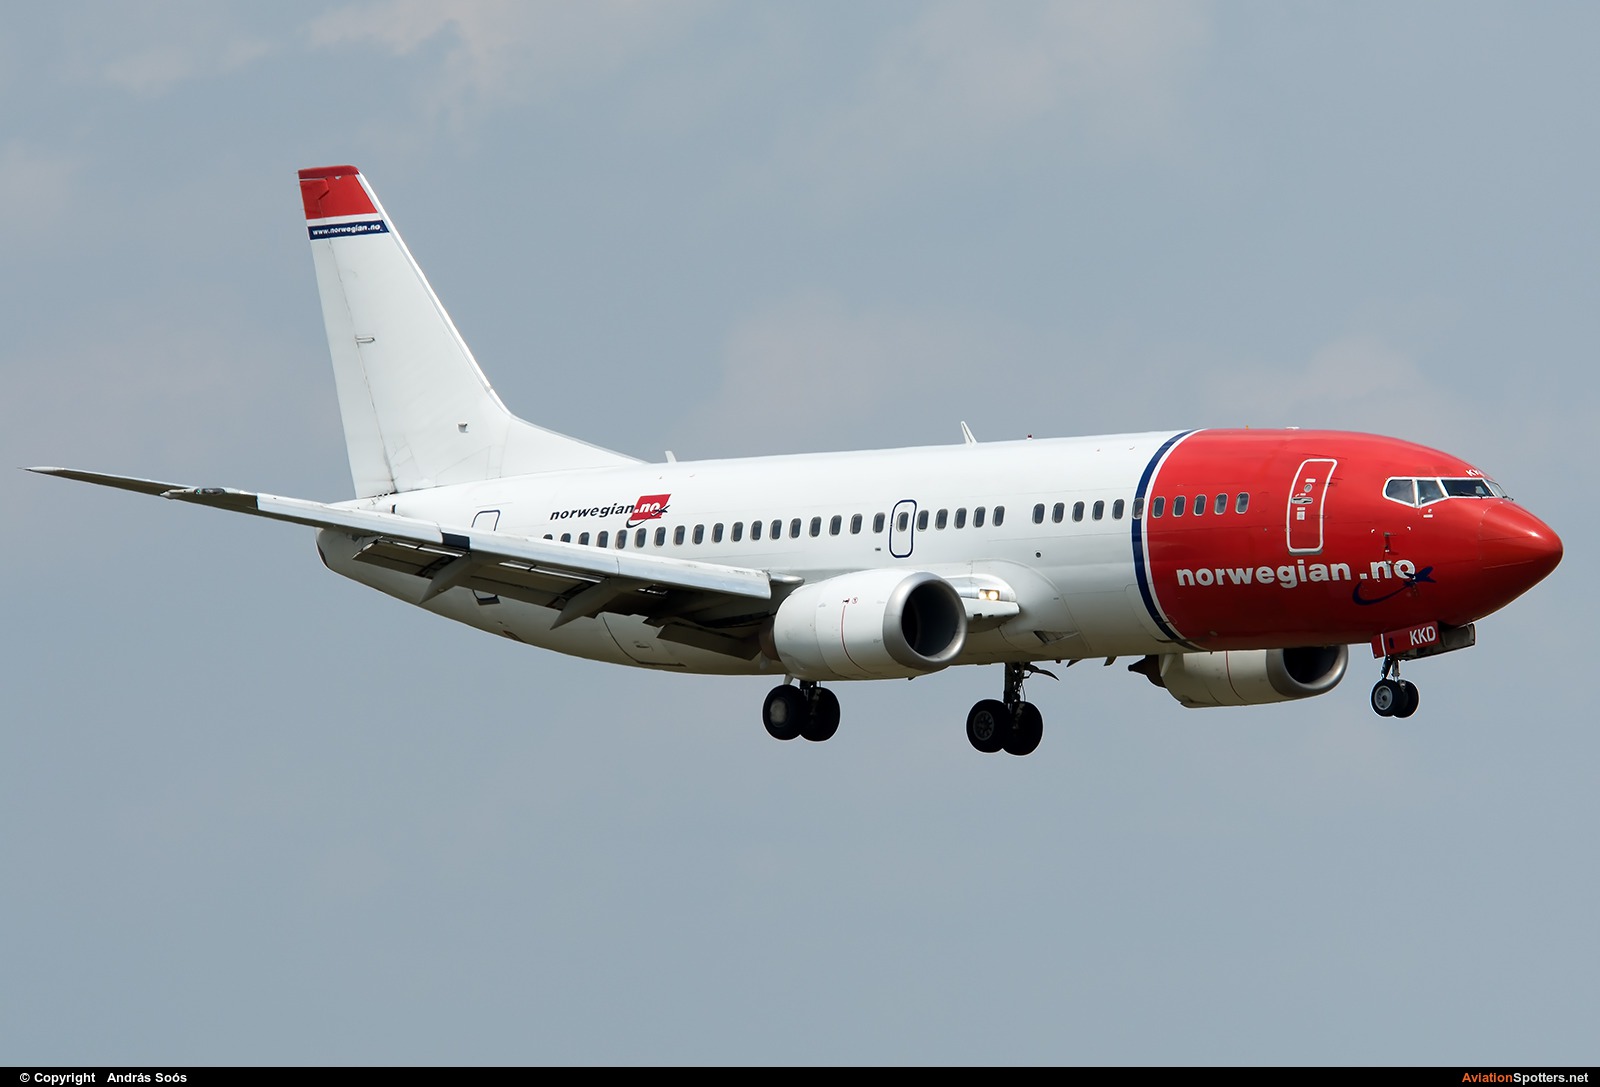 Norwegian Air Shuttle  -  737-300  (LN-KKD) By András Soós (sas1965)